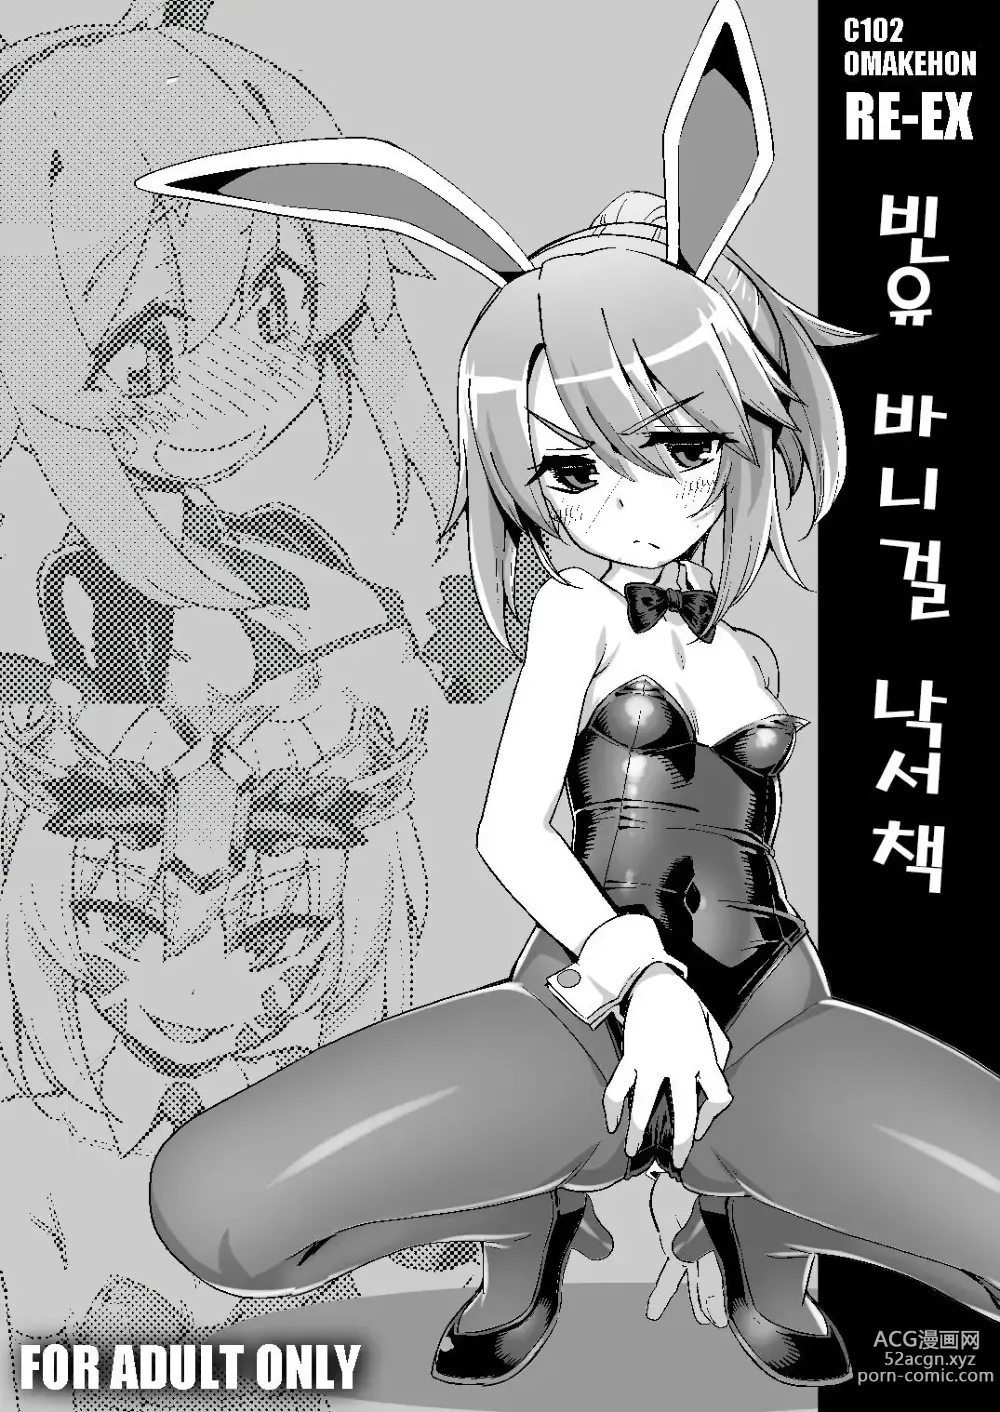 Page 1 of doujinshi RE-EX 빈유 바니걸 낙서책